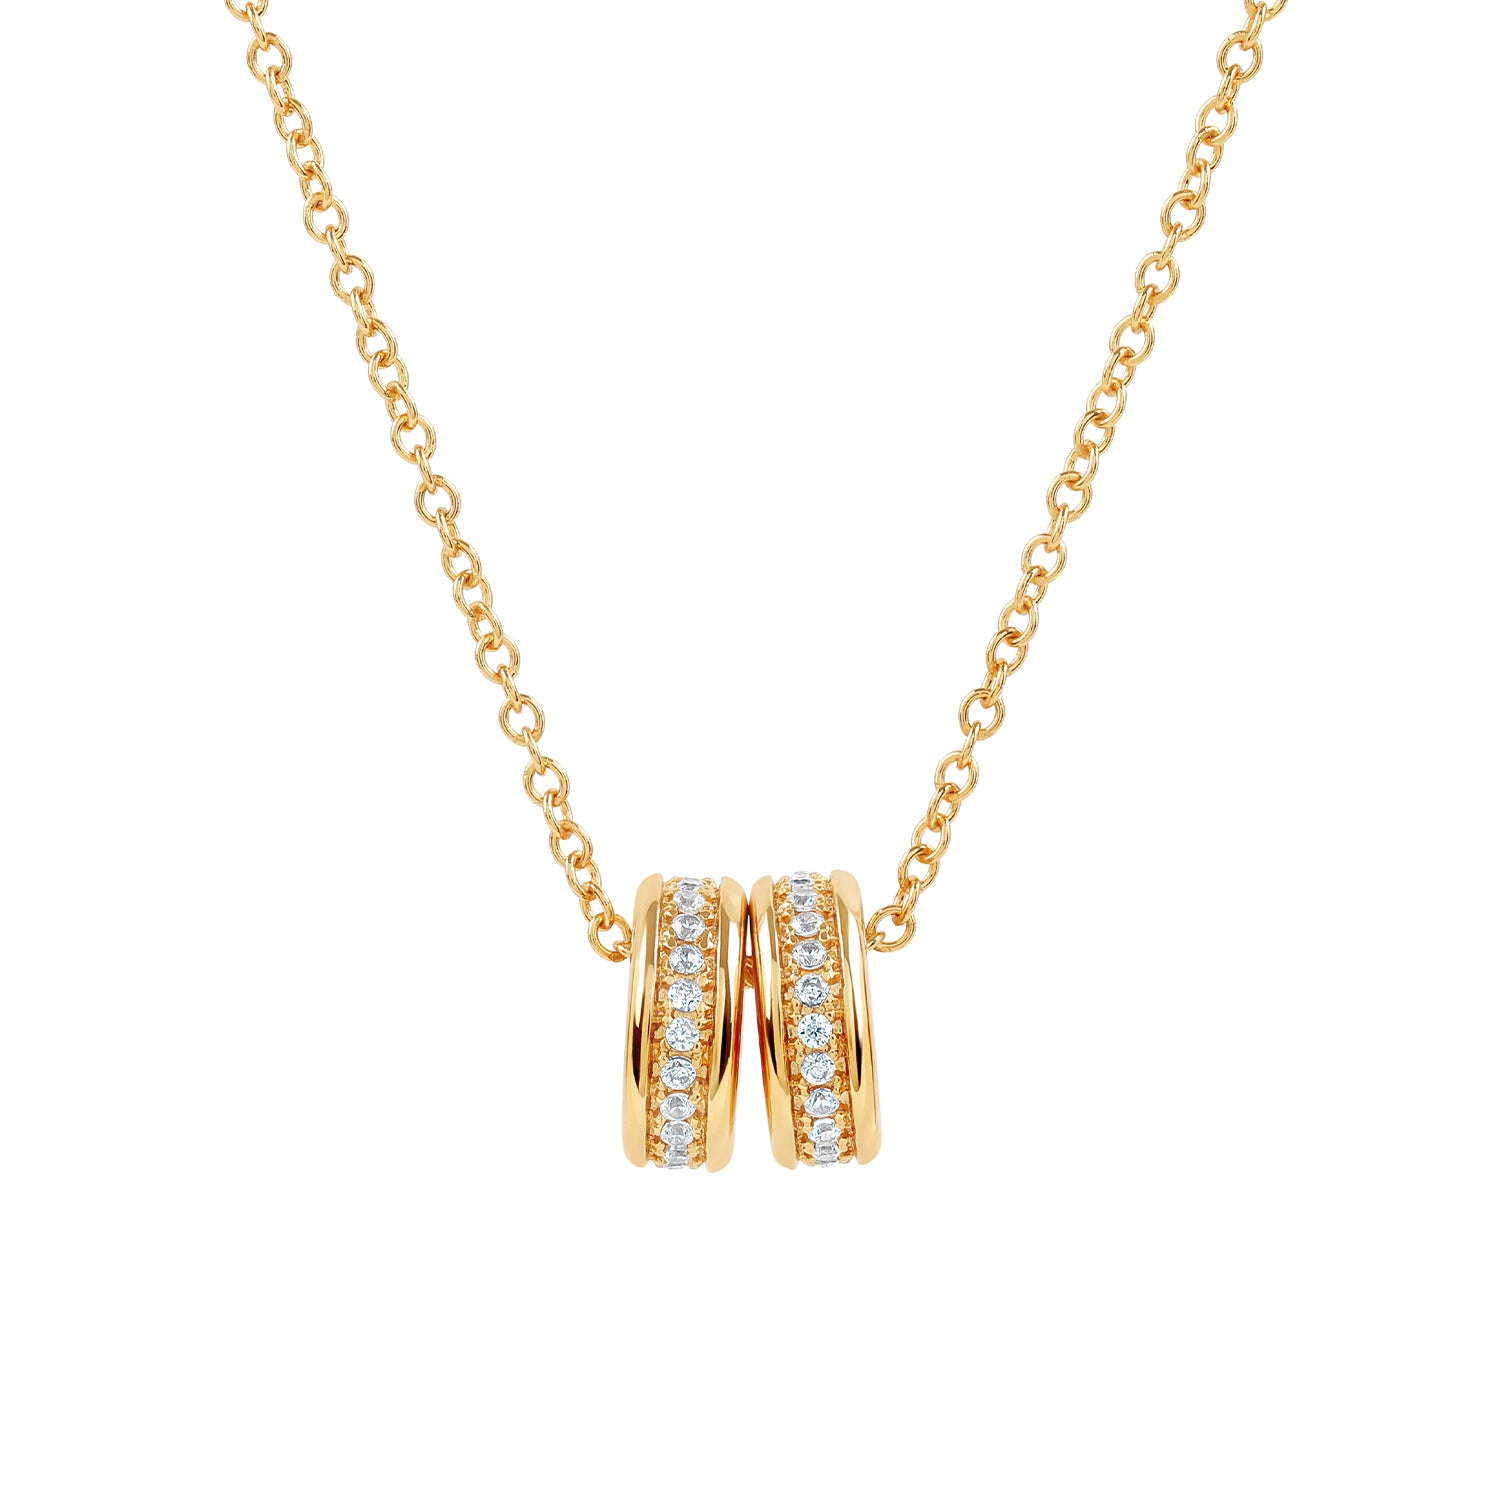 Elegant and minimalist gold pendant necklace set with cubic zirconia stones.